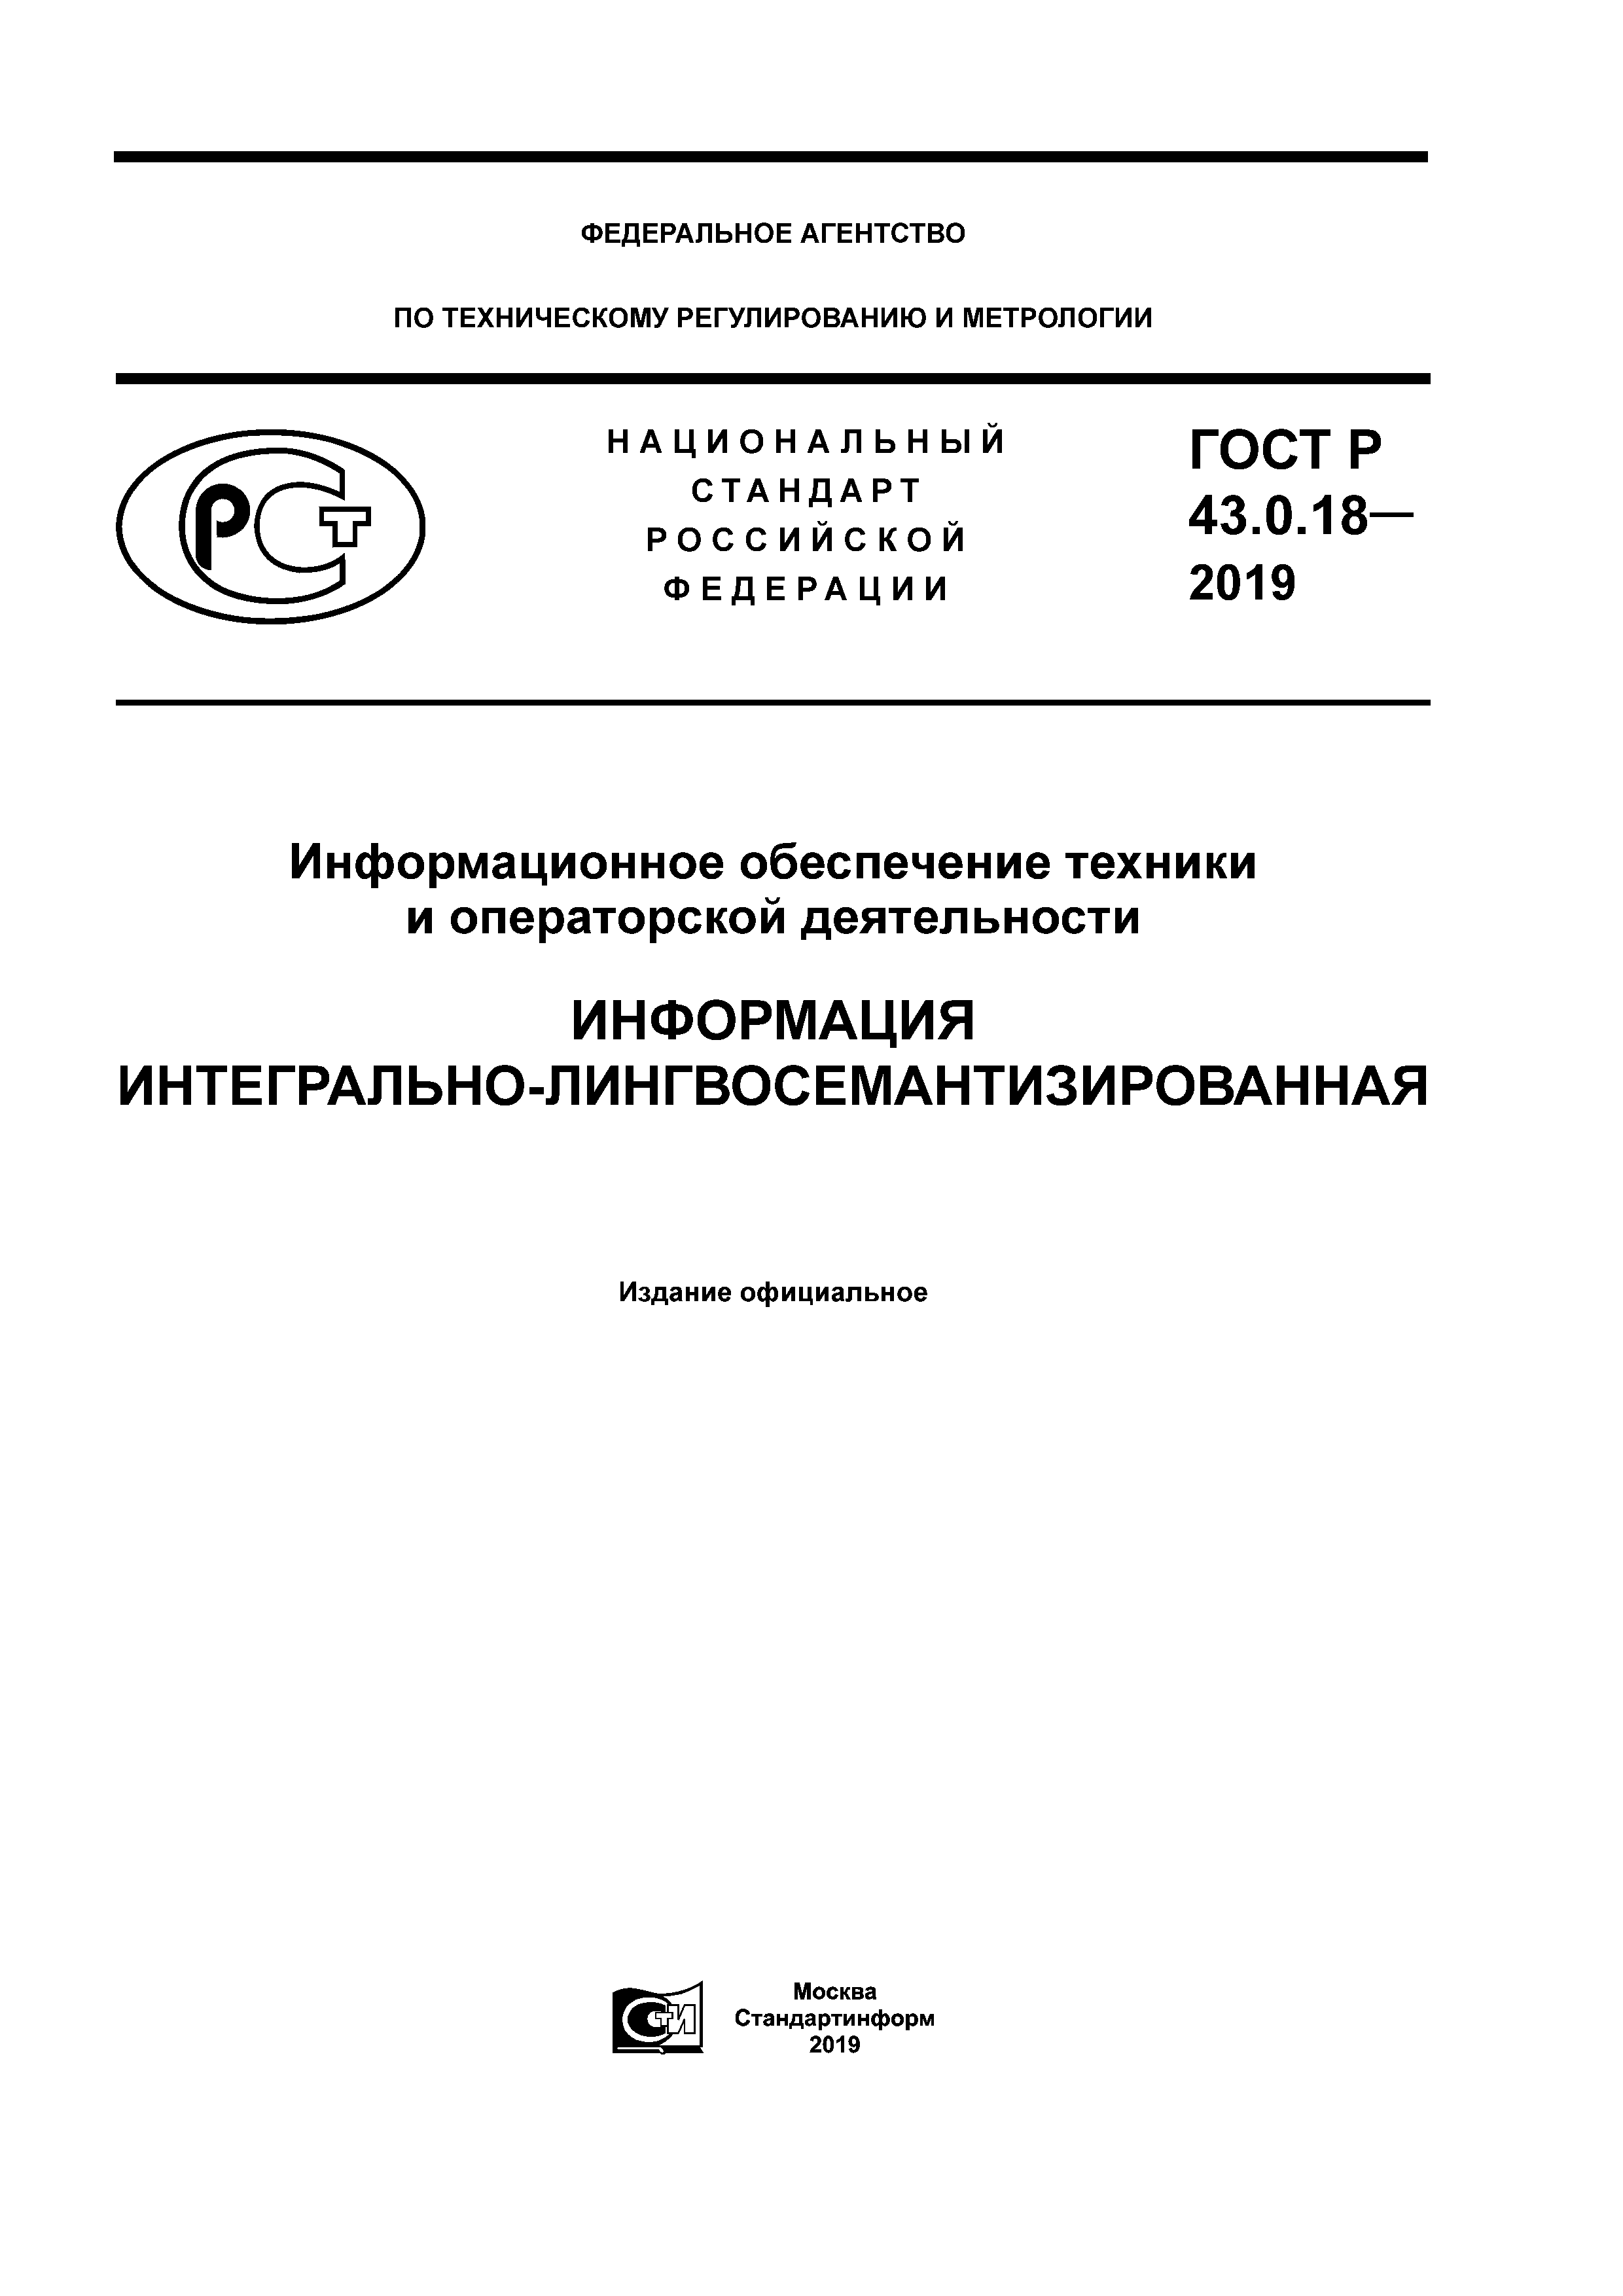 ГОСТ Р 43.0.18-2019